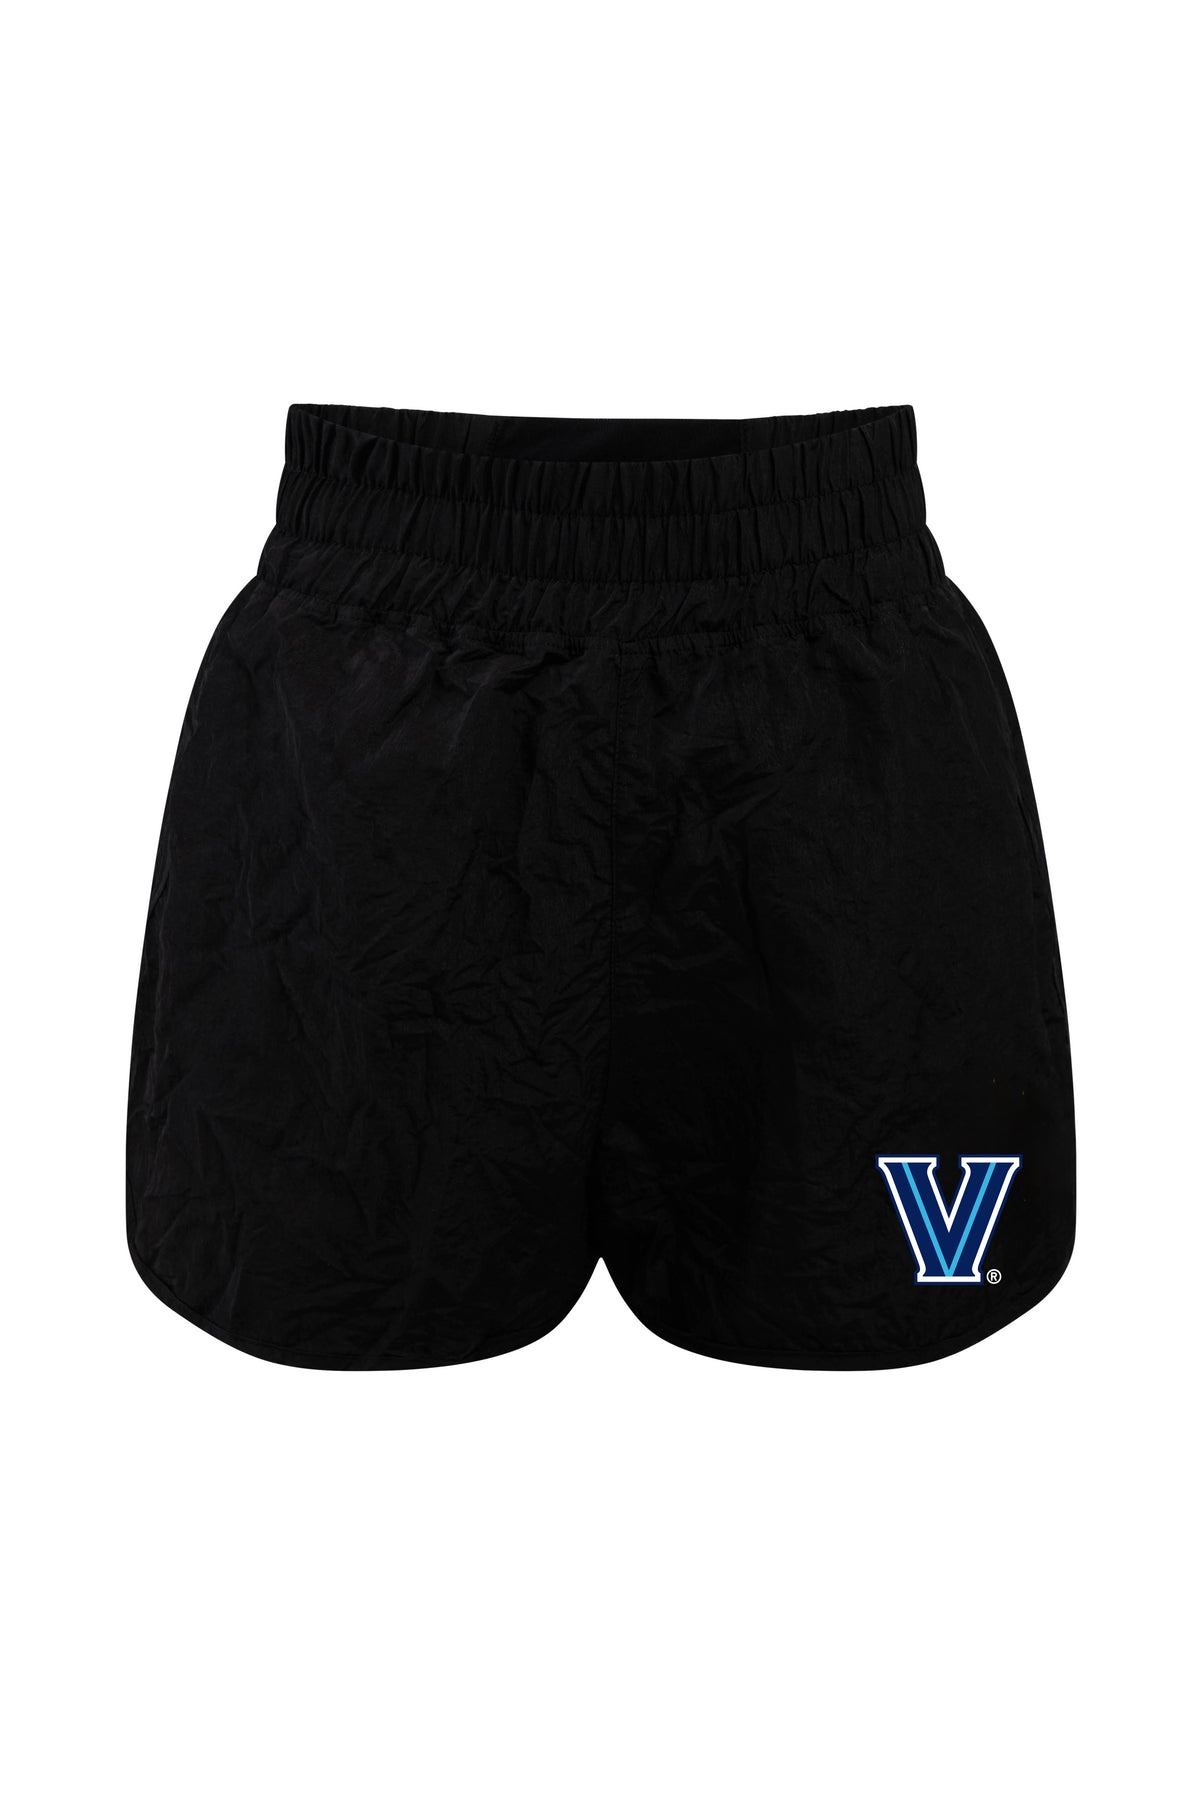 Villanova University Boxer Short